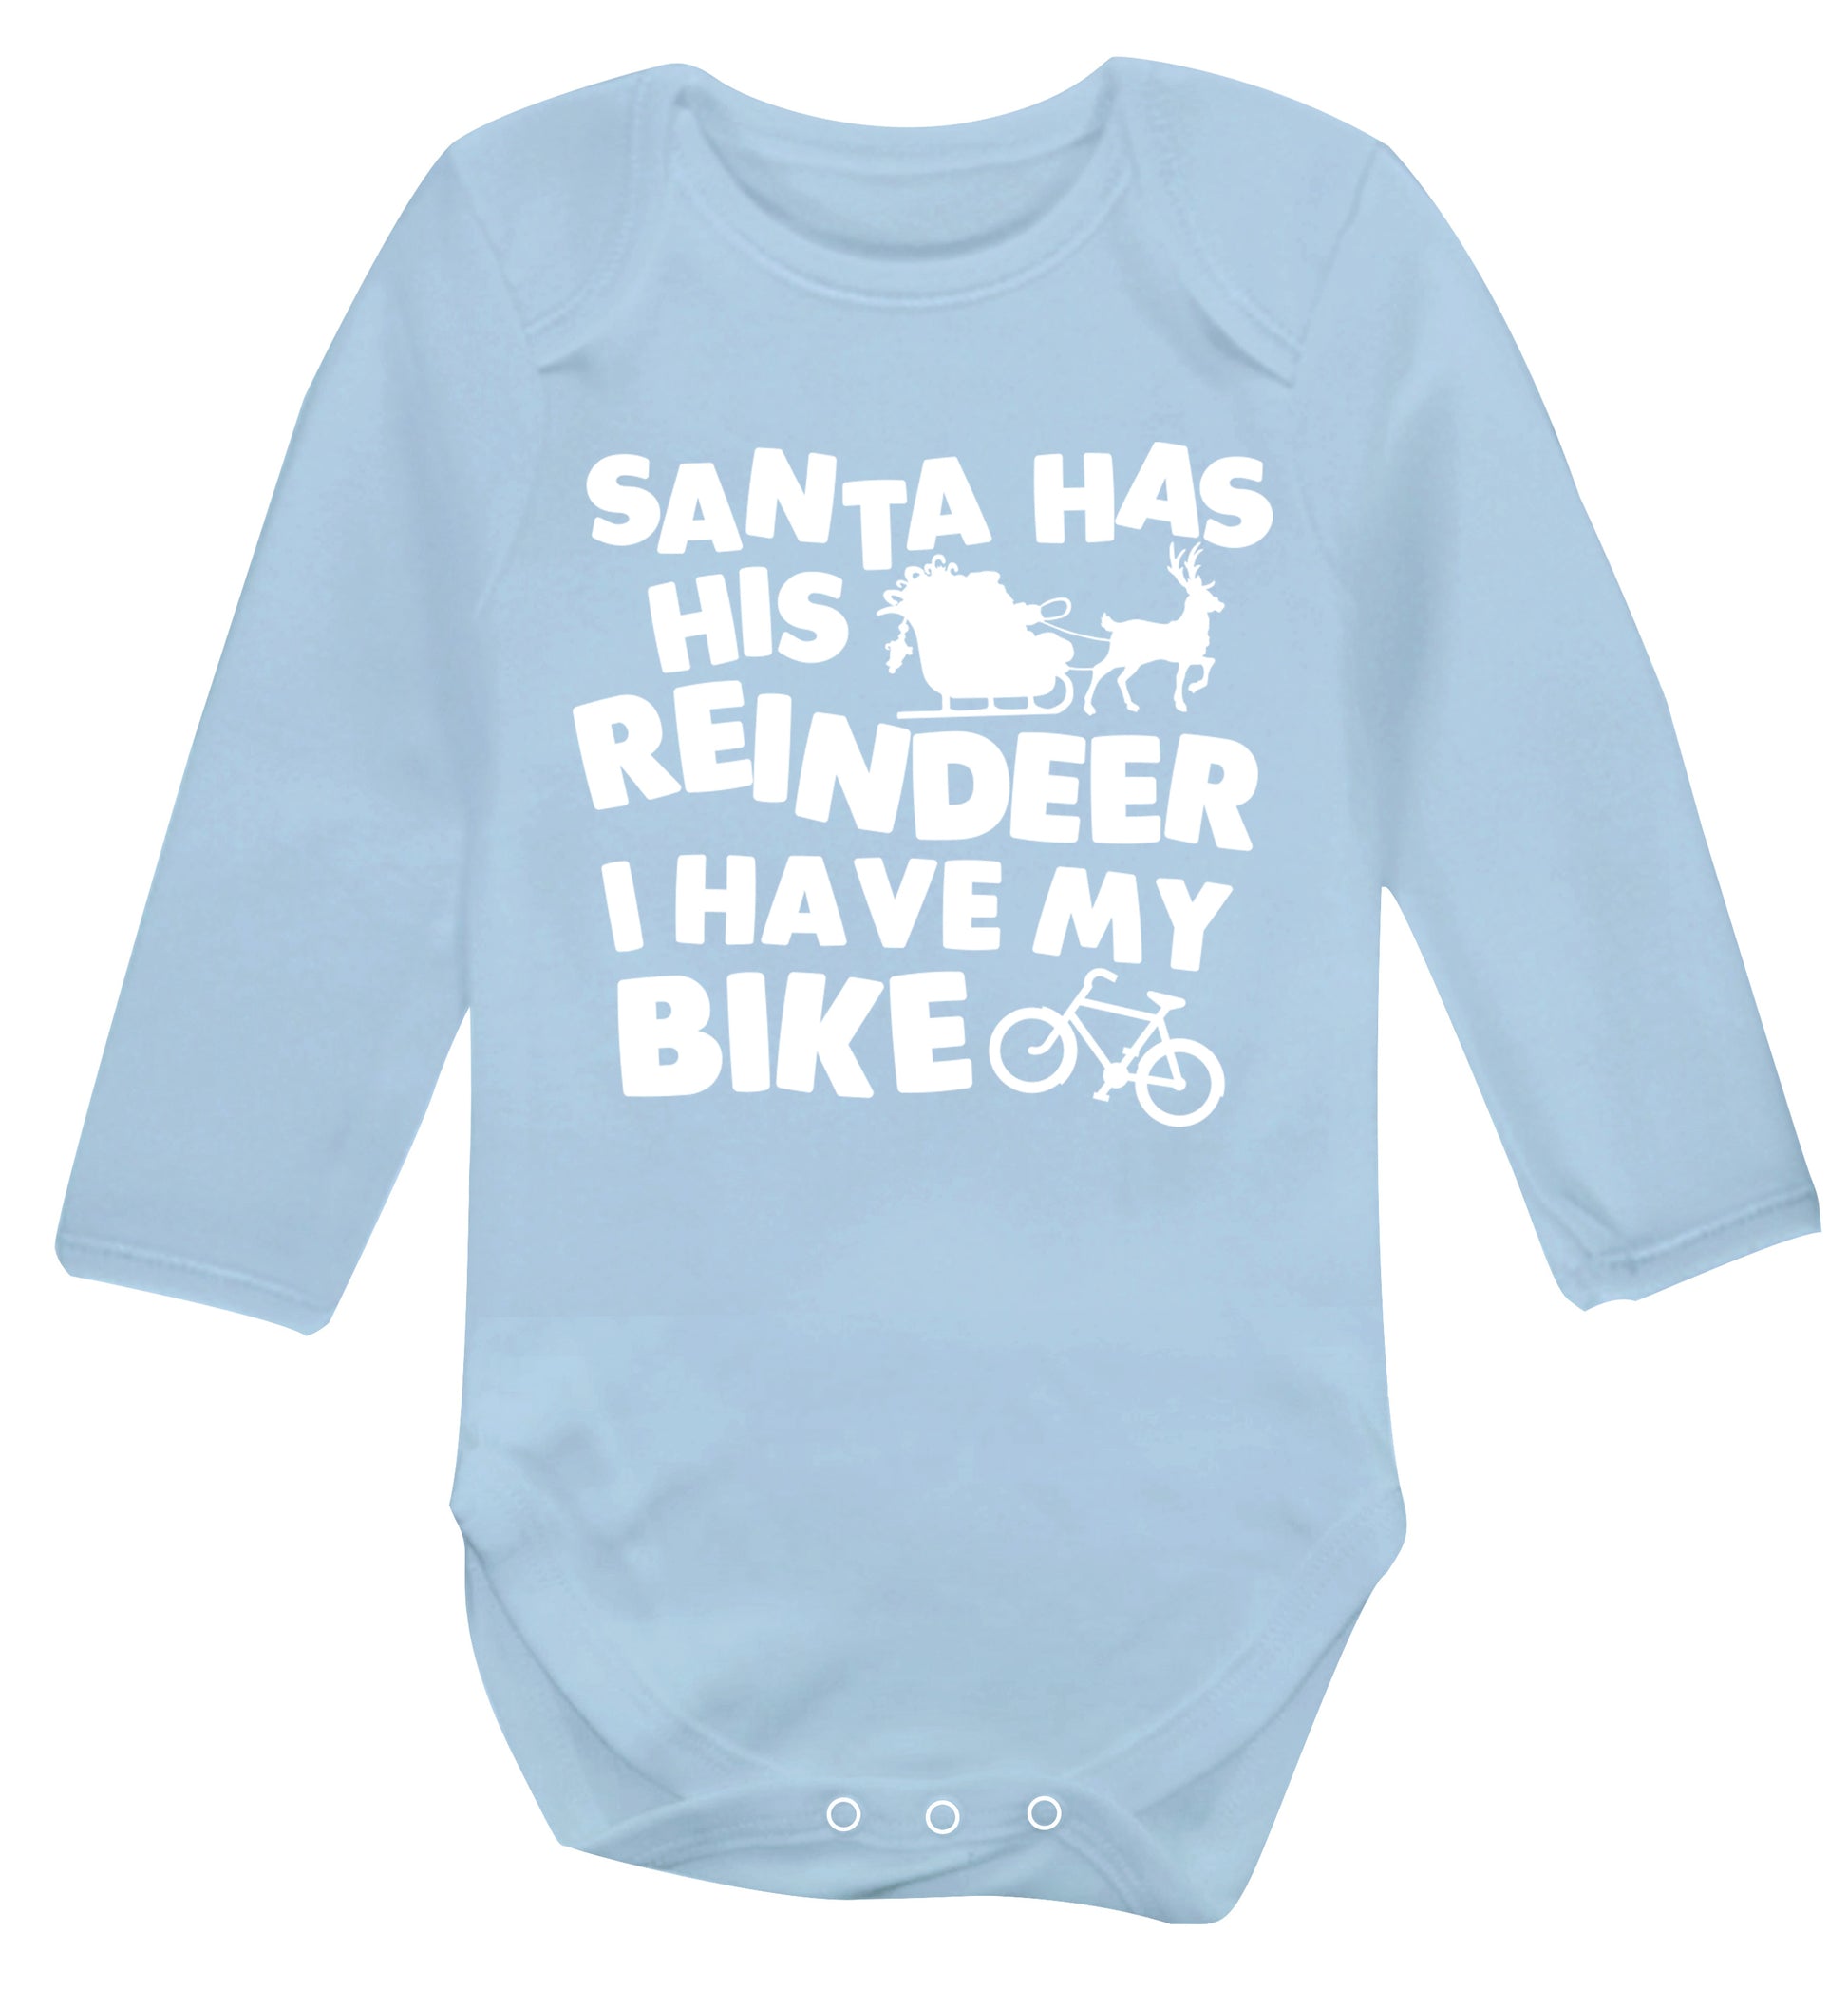 Santa has his reindeer I have my bike Baby Vest long sleeved pale blue 6-12 months